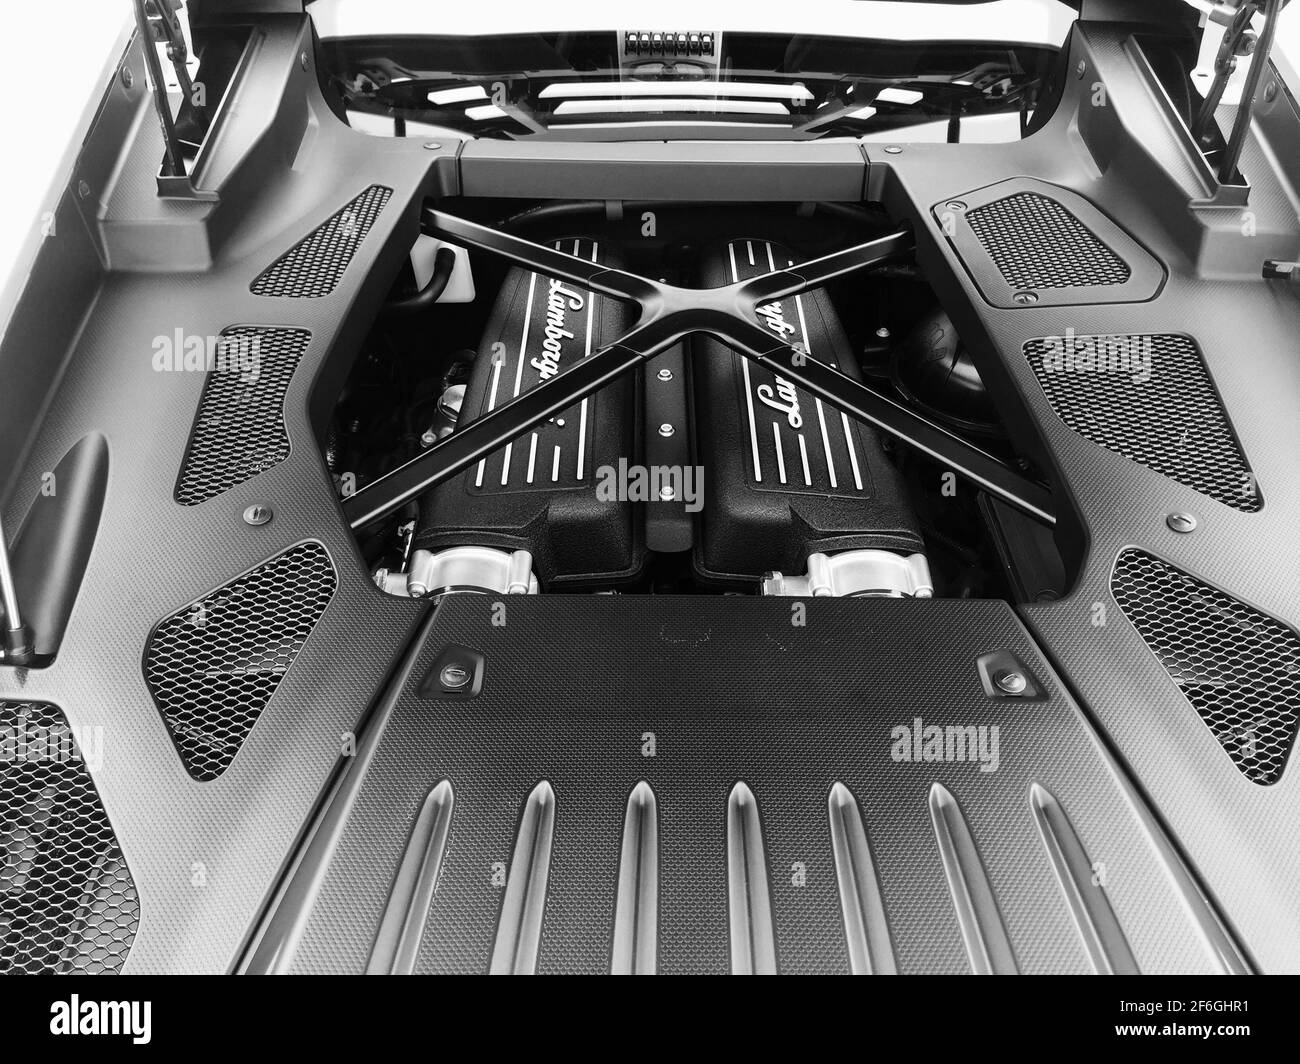 Lamborghini Aventador Engine Bay Photo Stock - Alamy